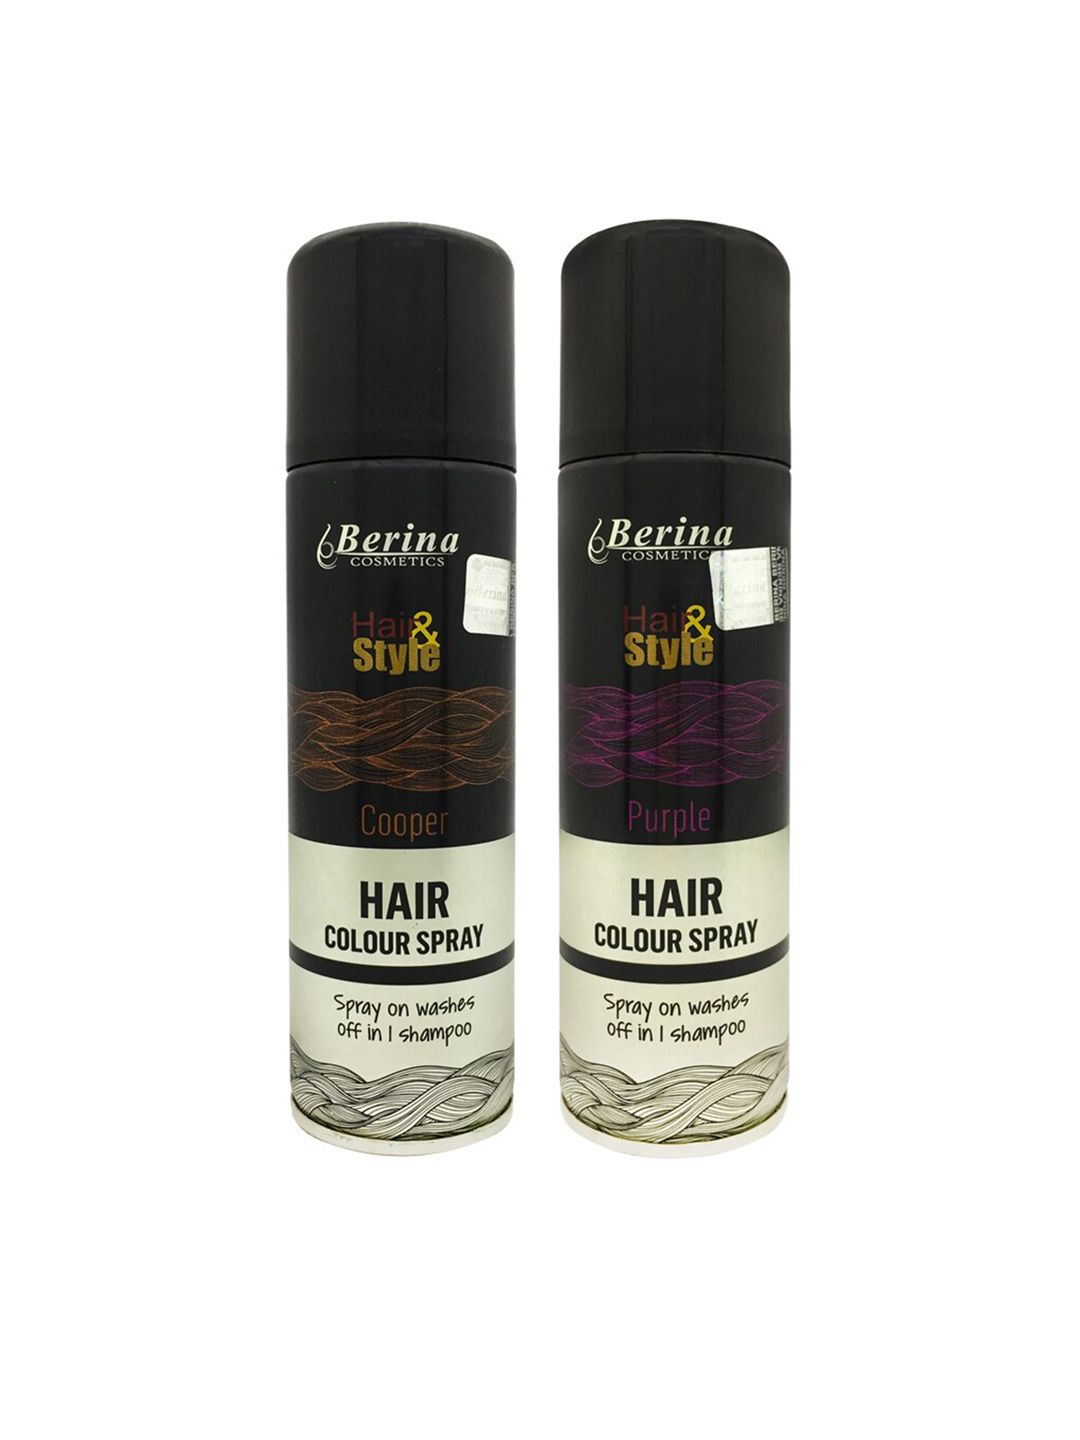 Berina Pack of 2 Hair Color Spray - Copper & Purple Price in India